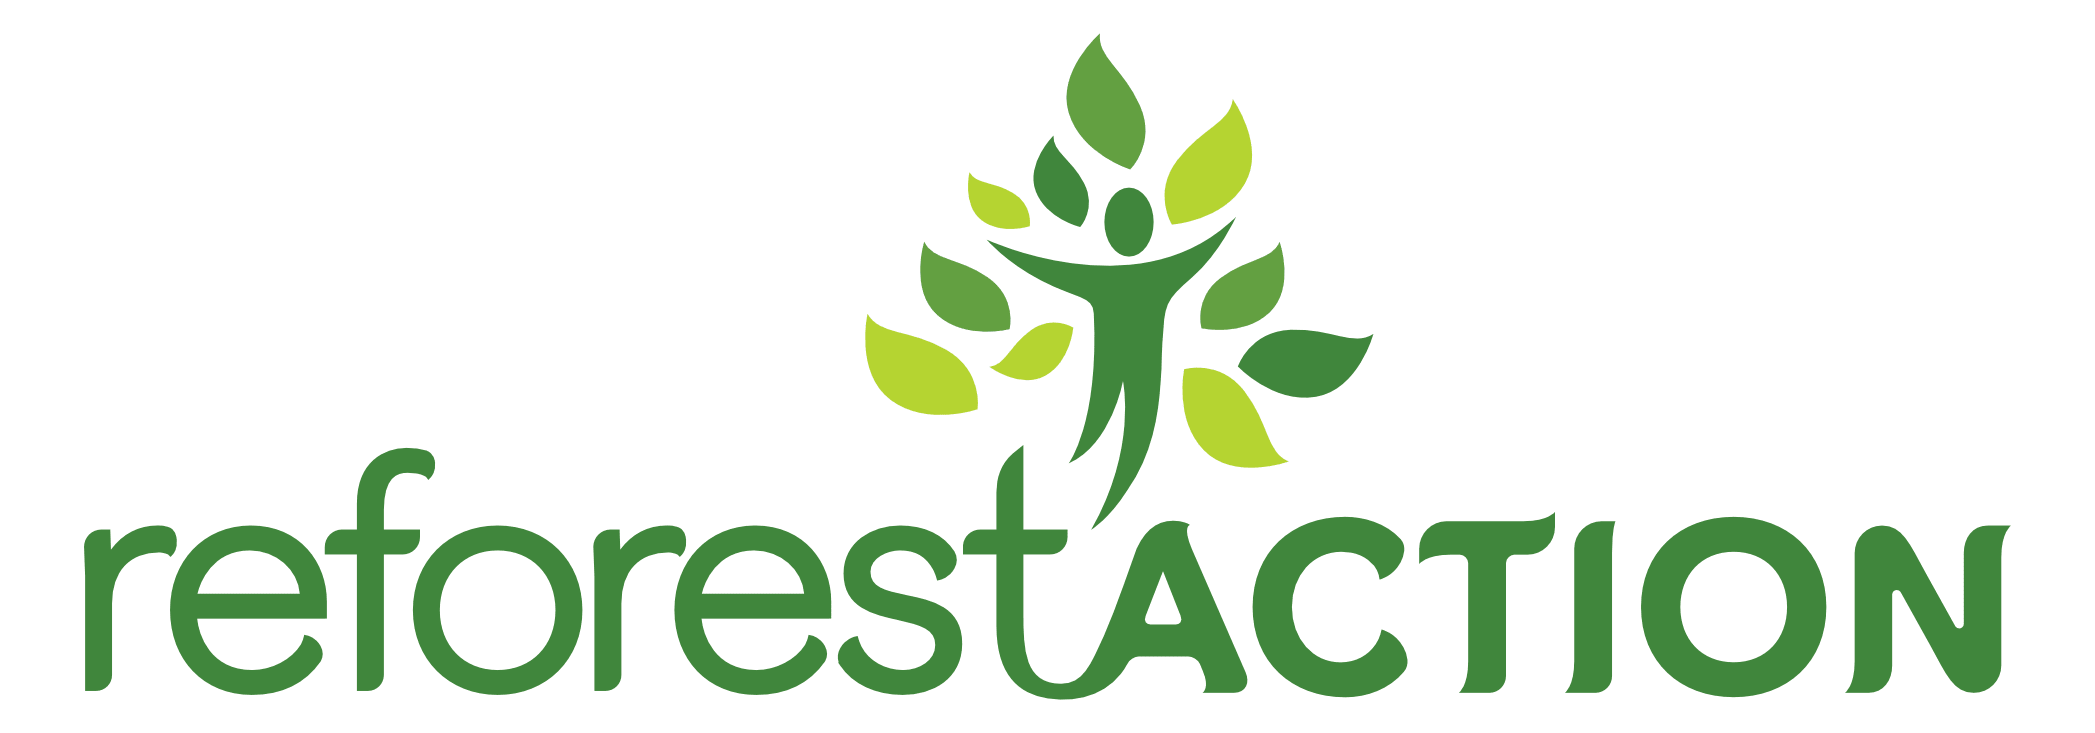 reforest action logo